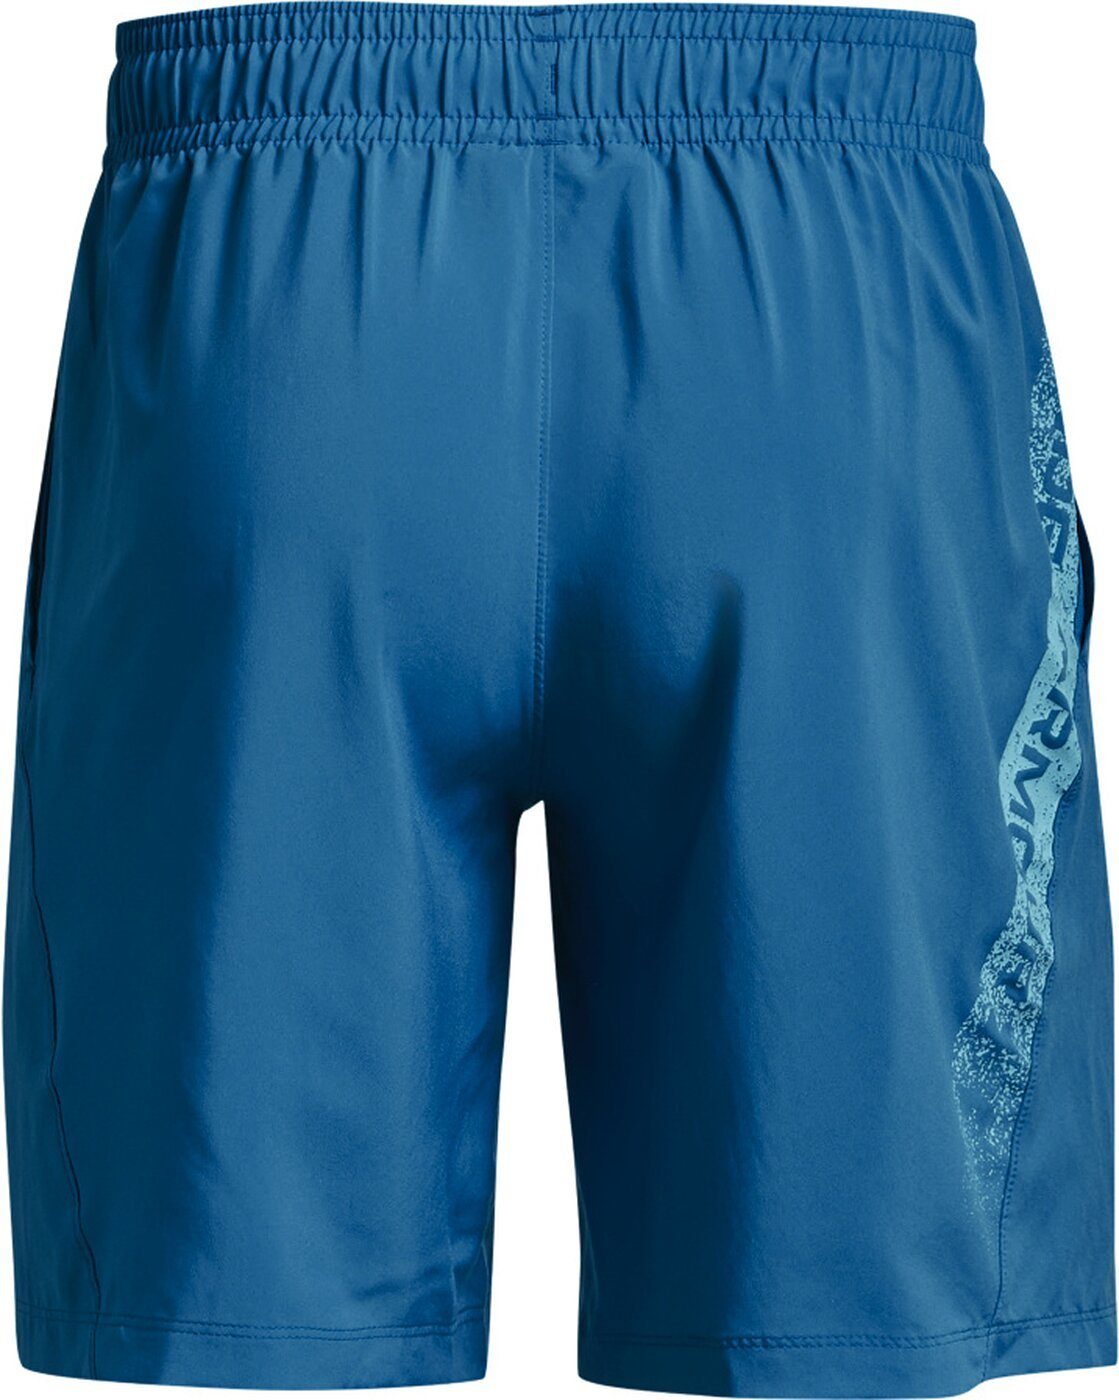 CRUISE BLUE UA 899 899 Shorts Under WOVEN SHORTS GRAPHIC Armour®